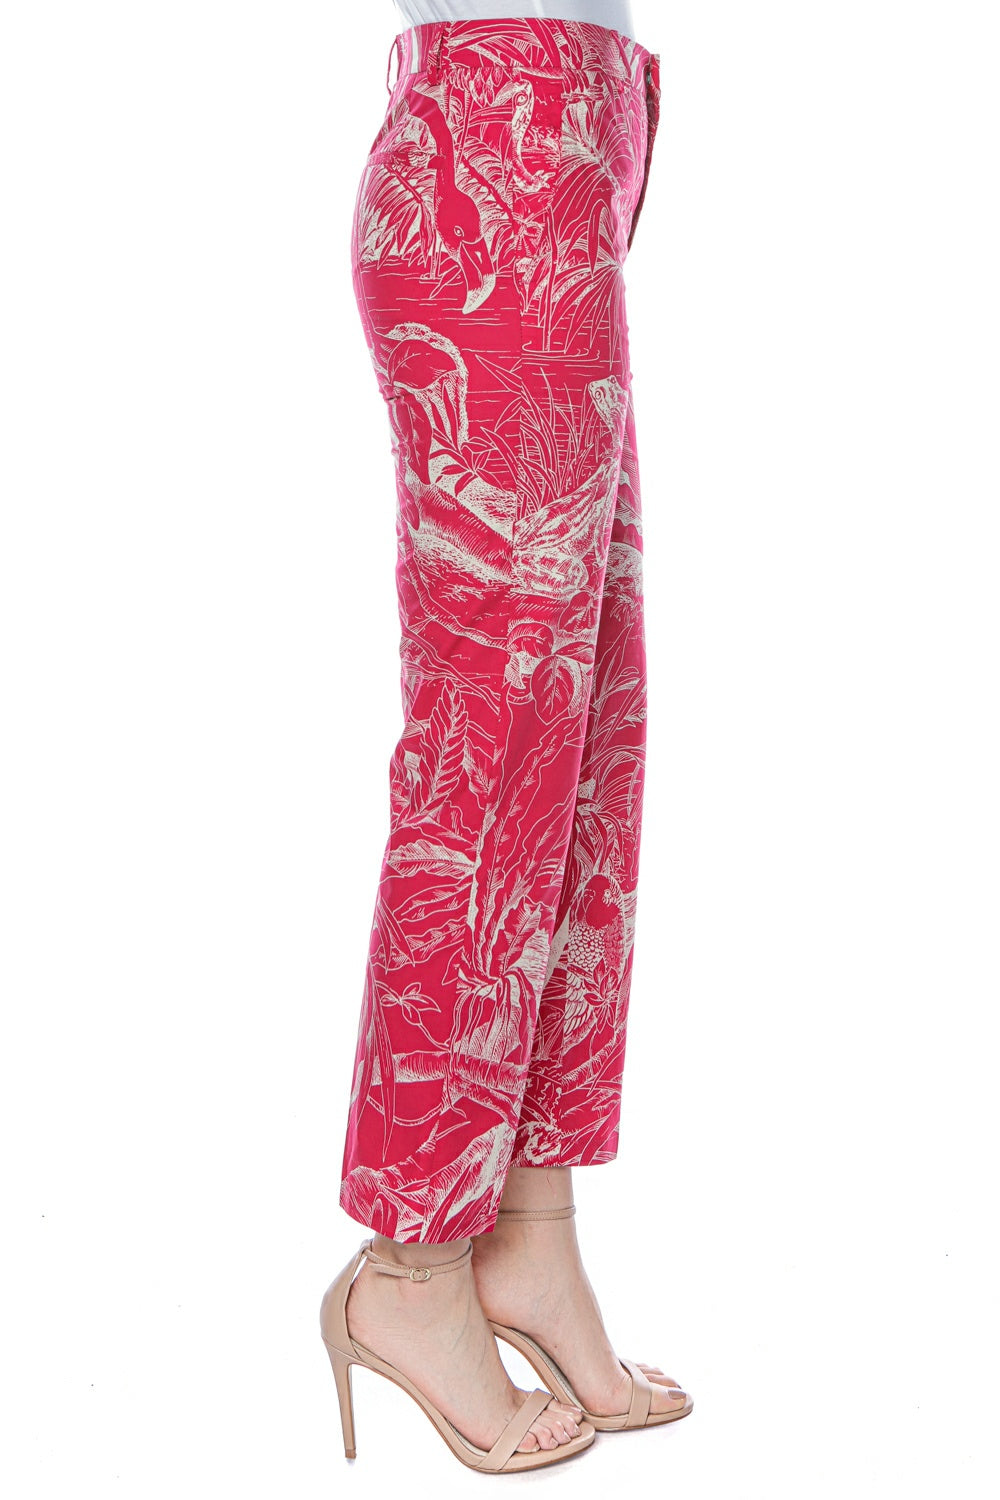 Pantaloni cu print floral Red Valentino